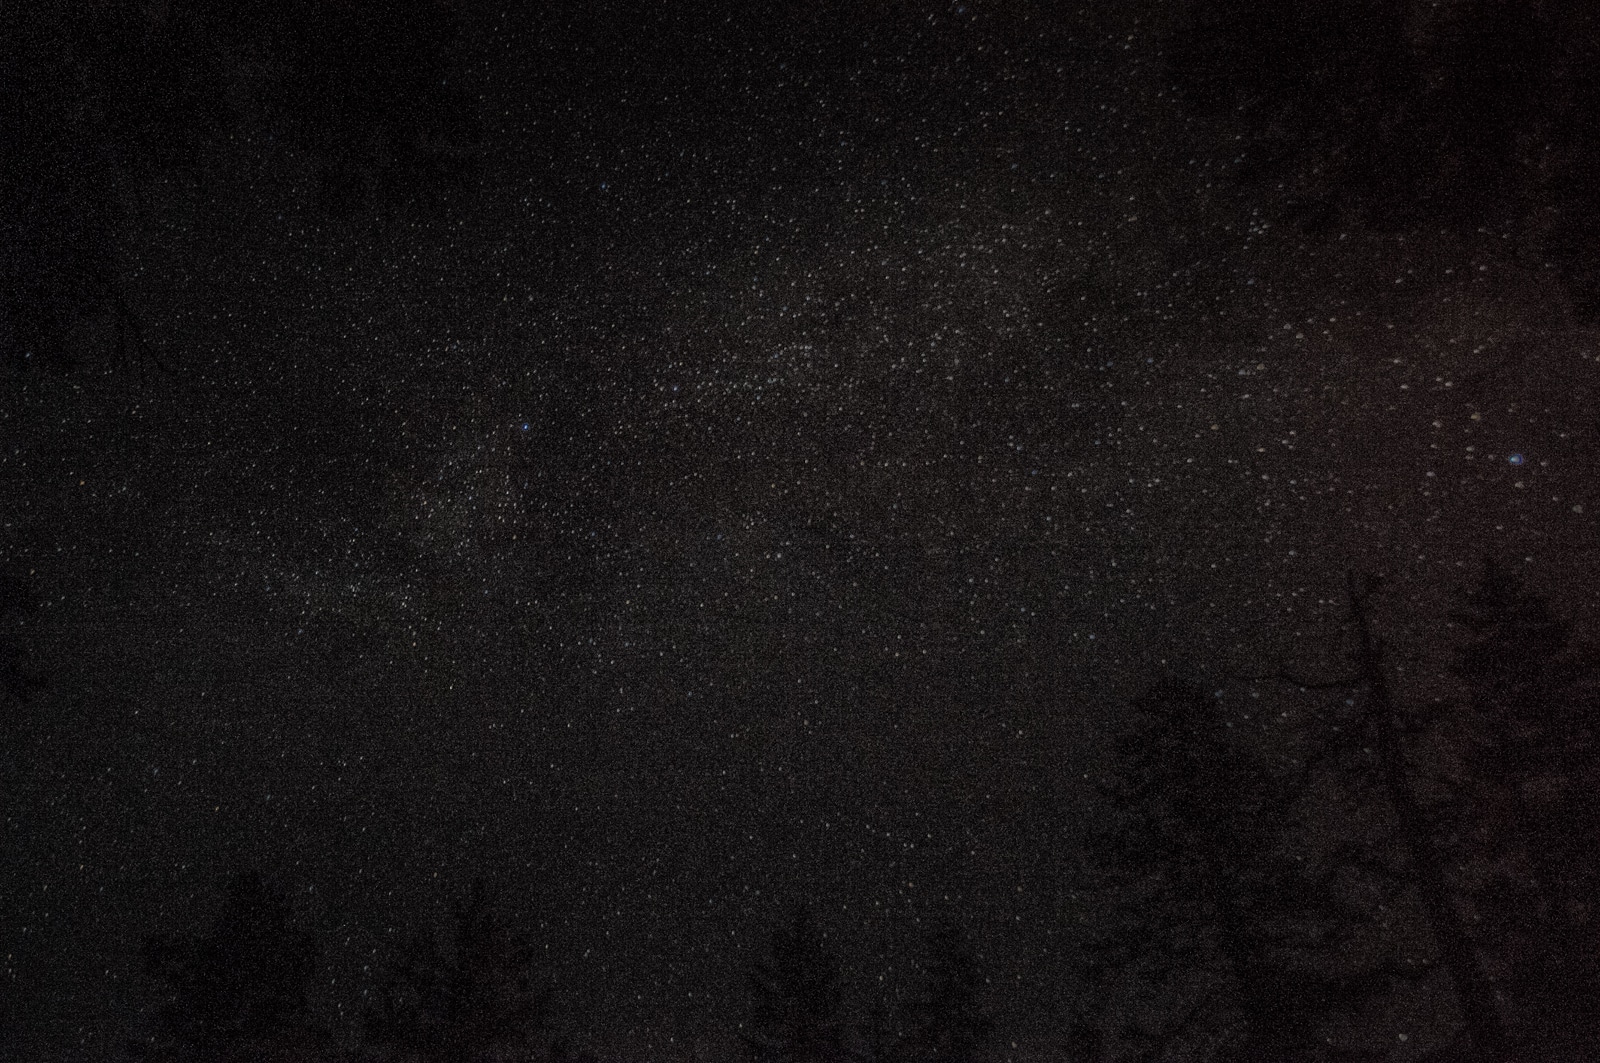 Yosemite ostrander lake star gazing